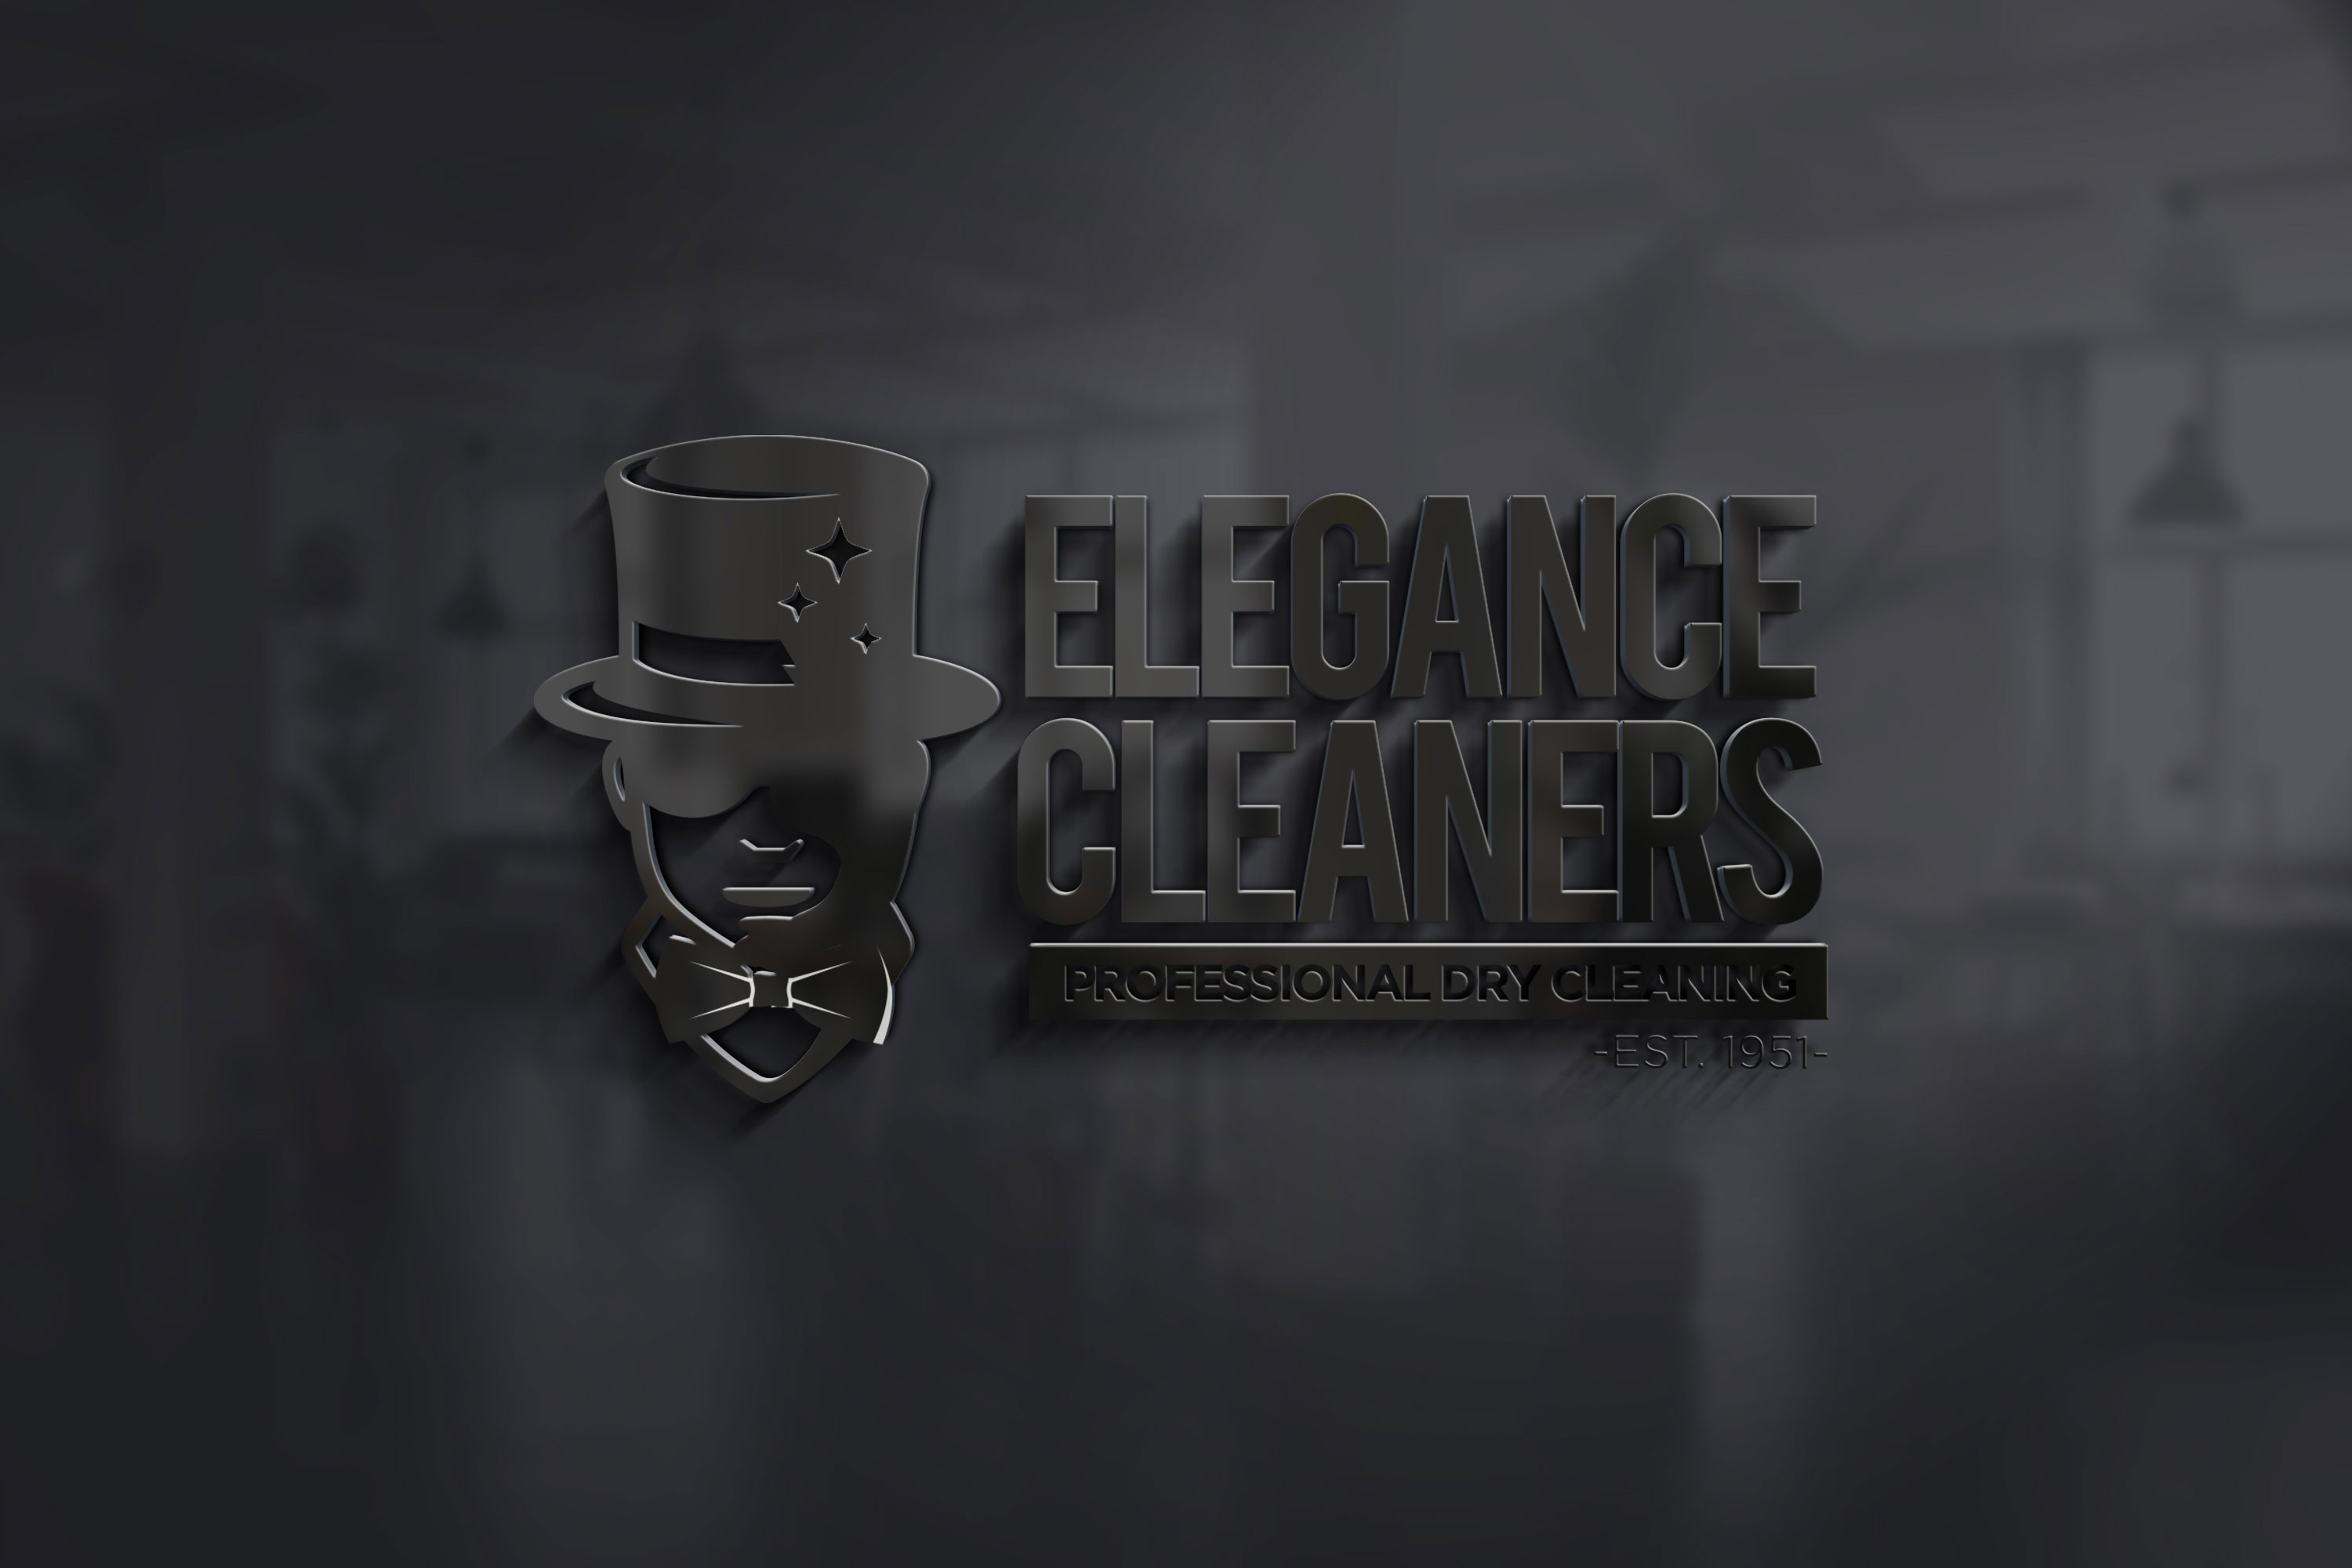 Cleaning Service logo design by digitiz studio in Dubai UAE